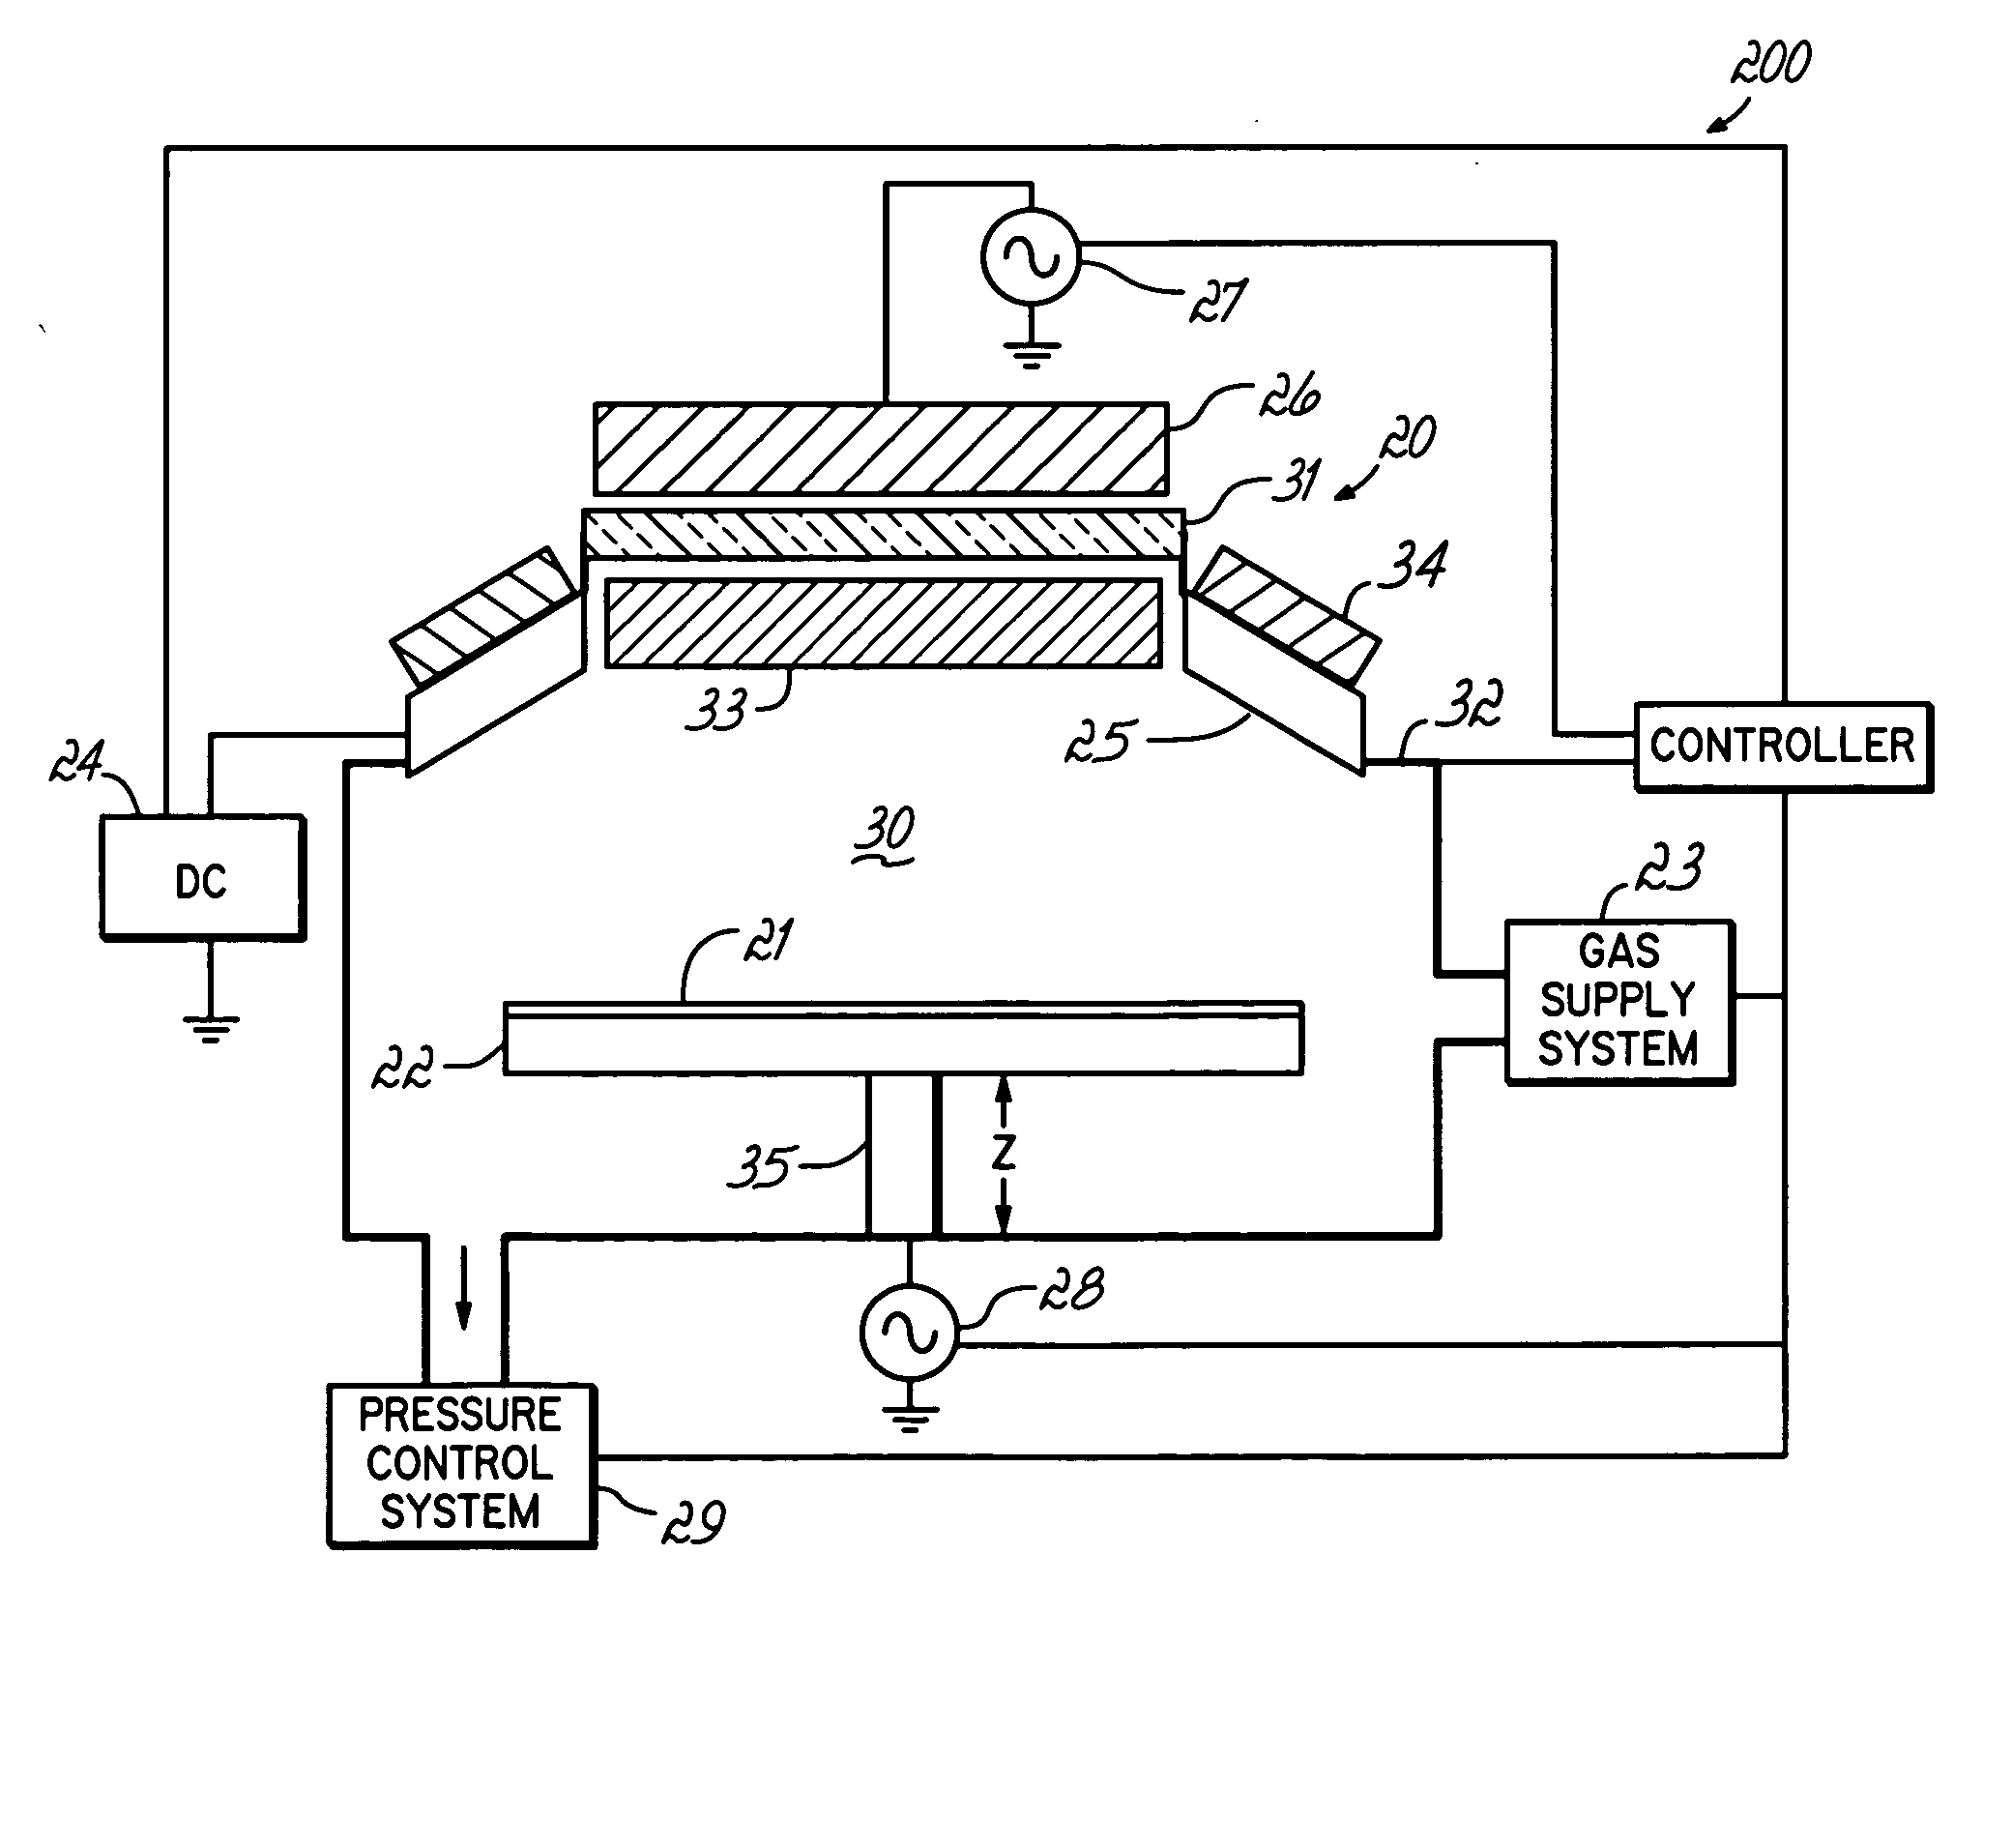 Ionized physical vapor deposition (iPVD) process